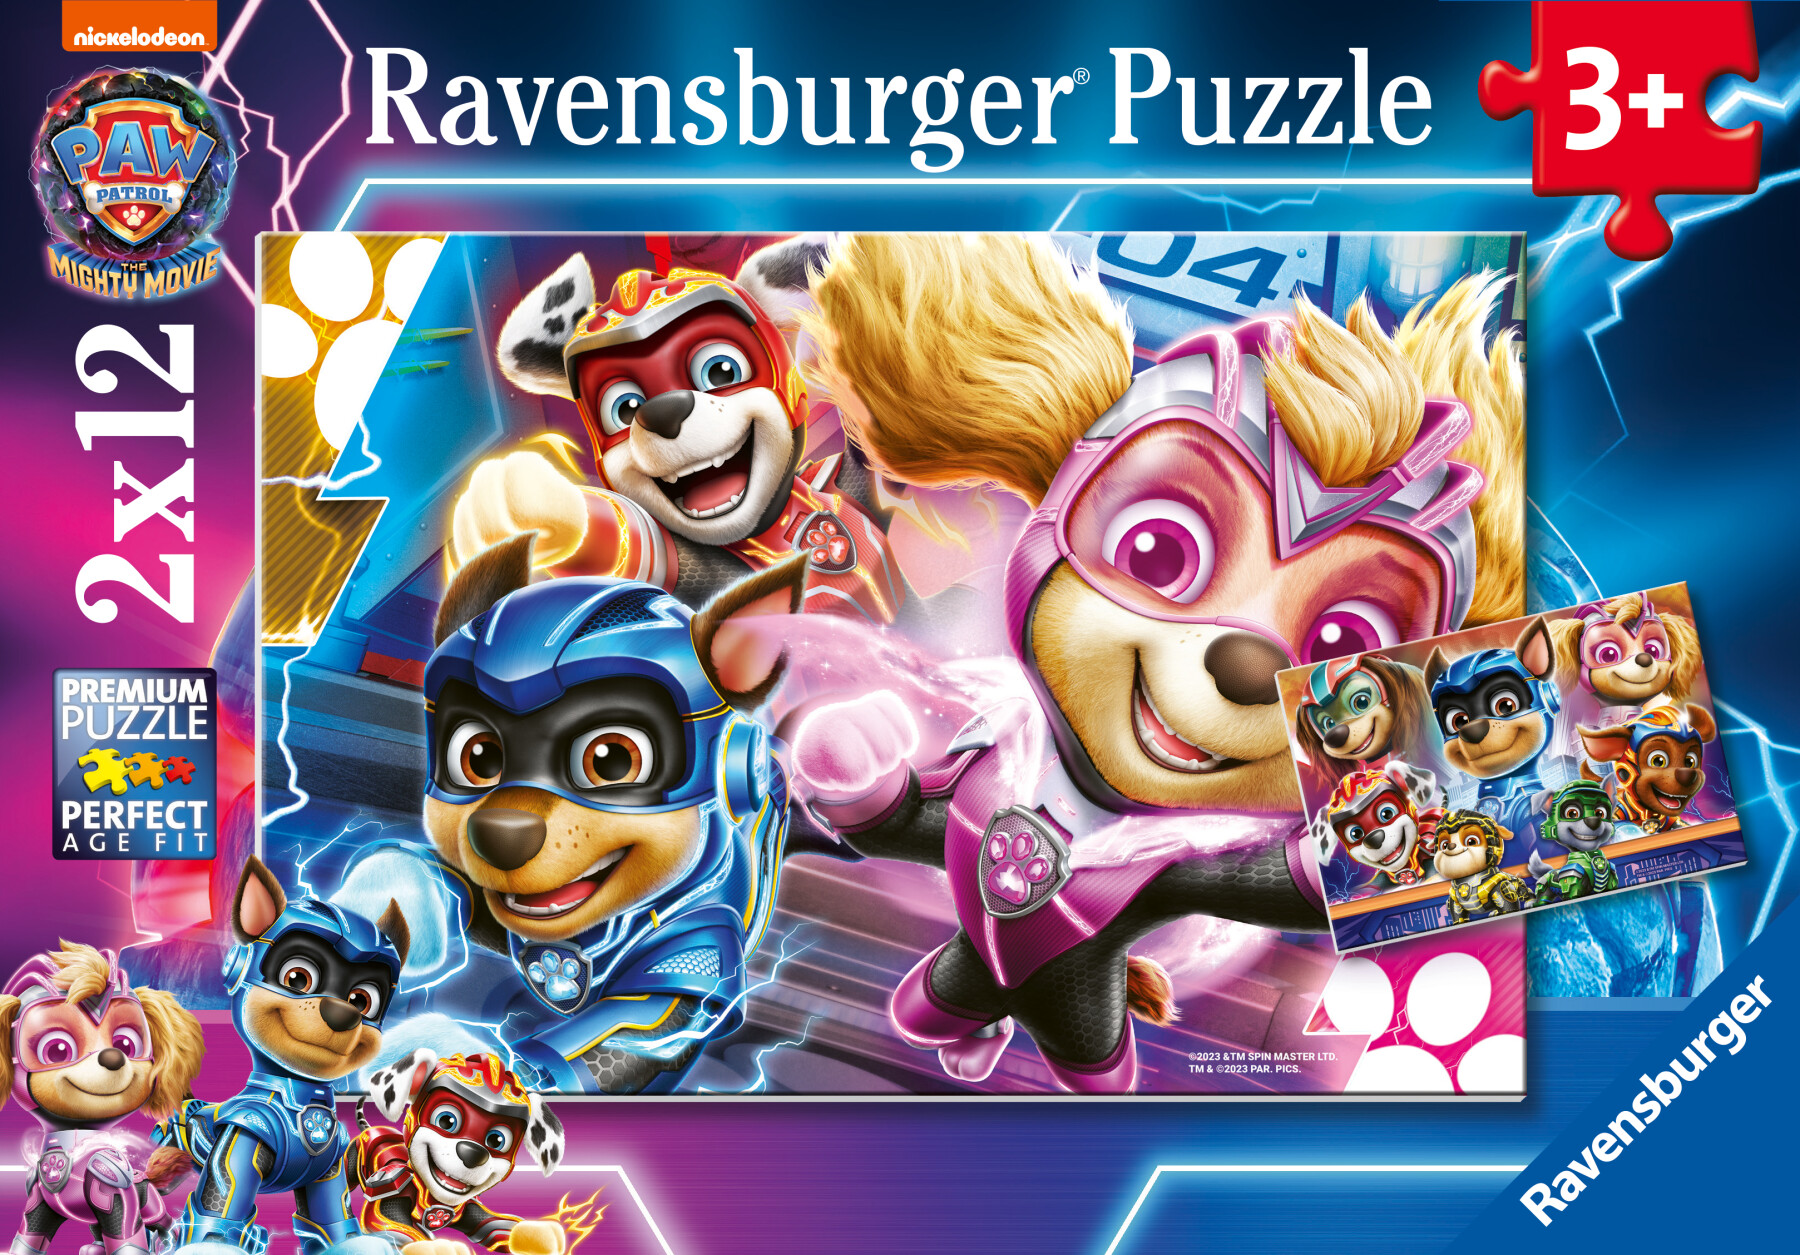 Ravensburger - puzzle paw patrol, the mighty movie, collezione 2x12, 2 puzzle da 12 pezzi, età raccomandata 3+ anni - RAVENSBURGER, Paw Patrol